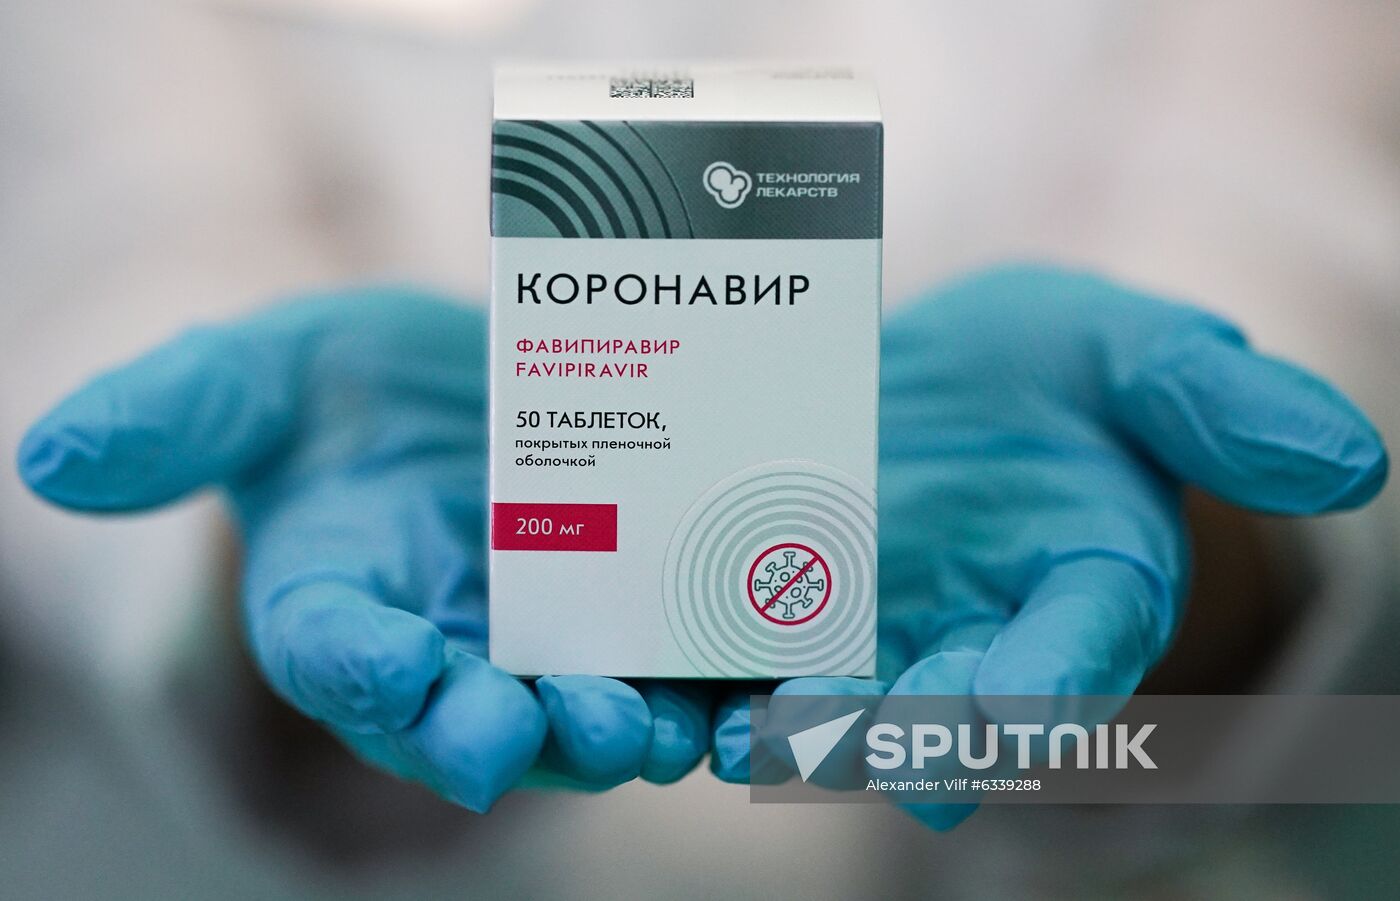 Russia Coronavirus Medication